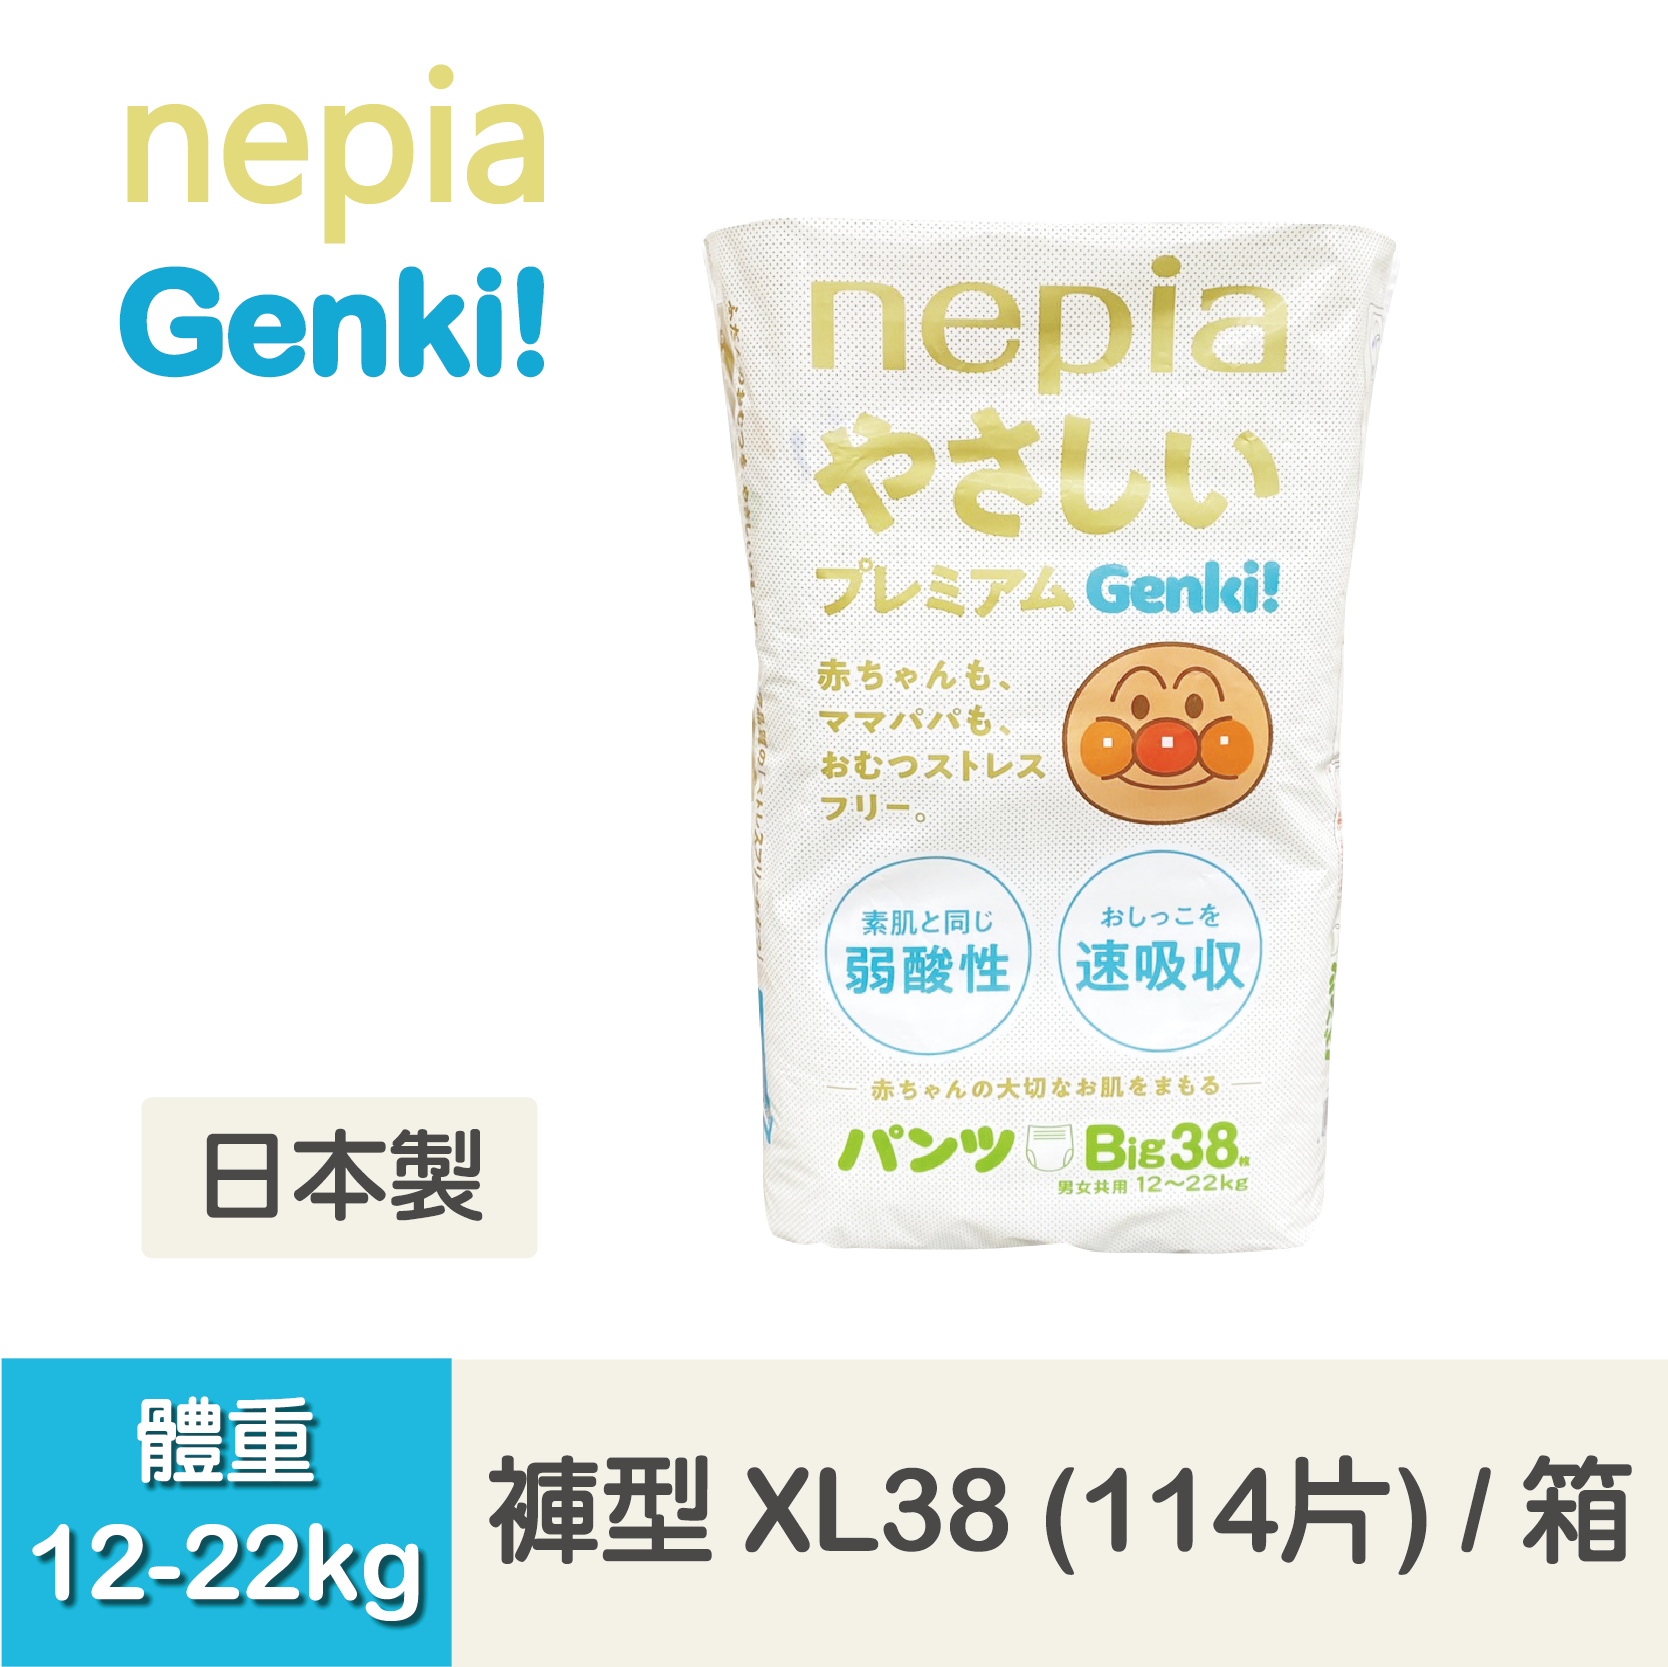 【nepia王子】境內版Genki 麵包超人紙尿褲/尿布(M/L/XL/XXL)